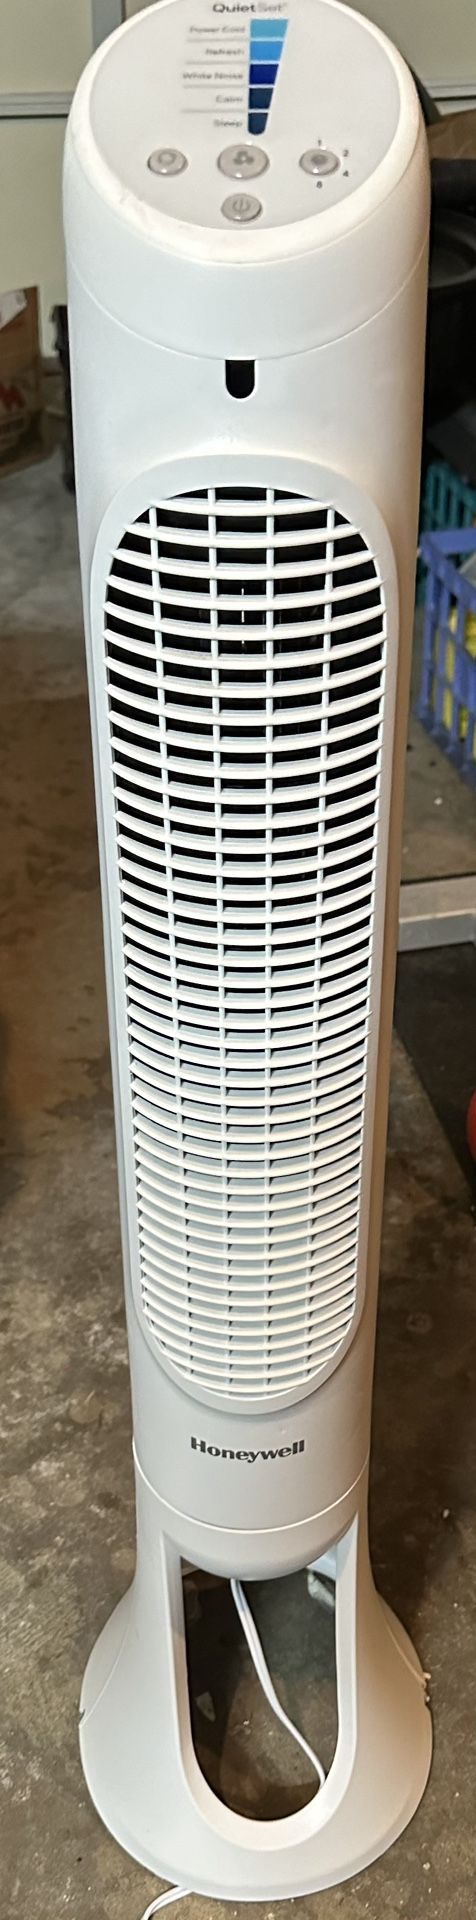 Honeywell Quietset 5 Tower Fan